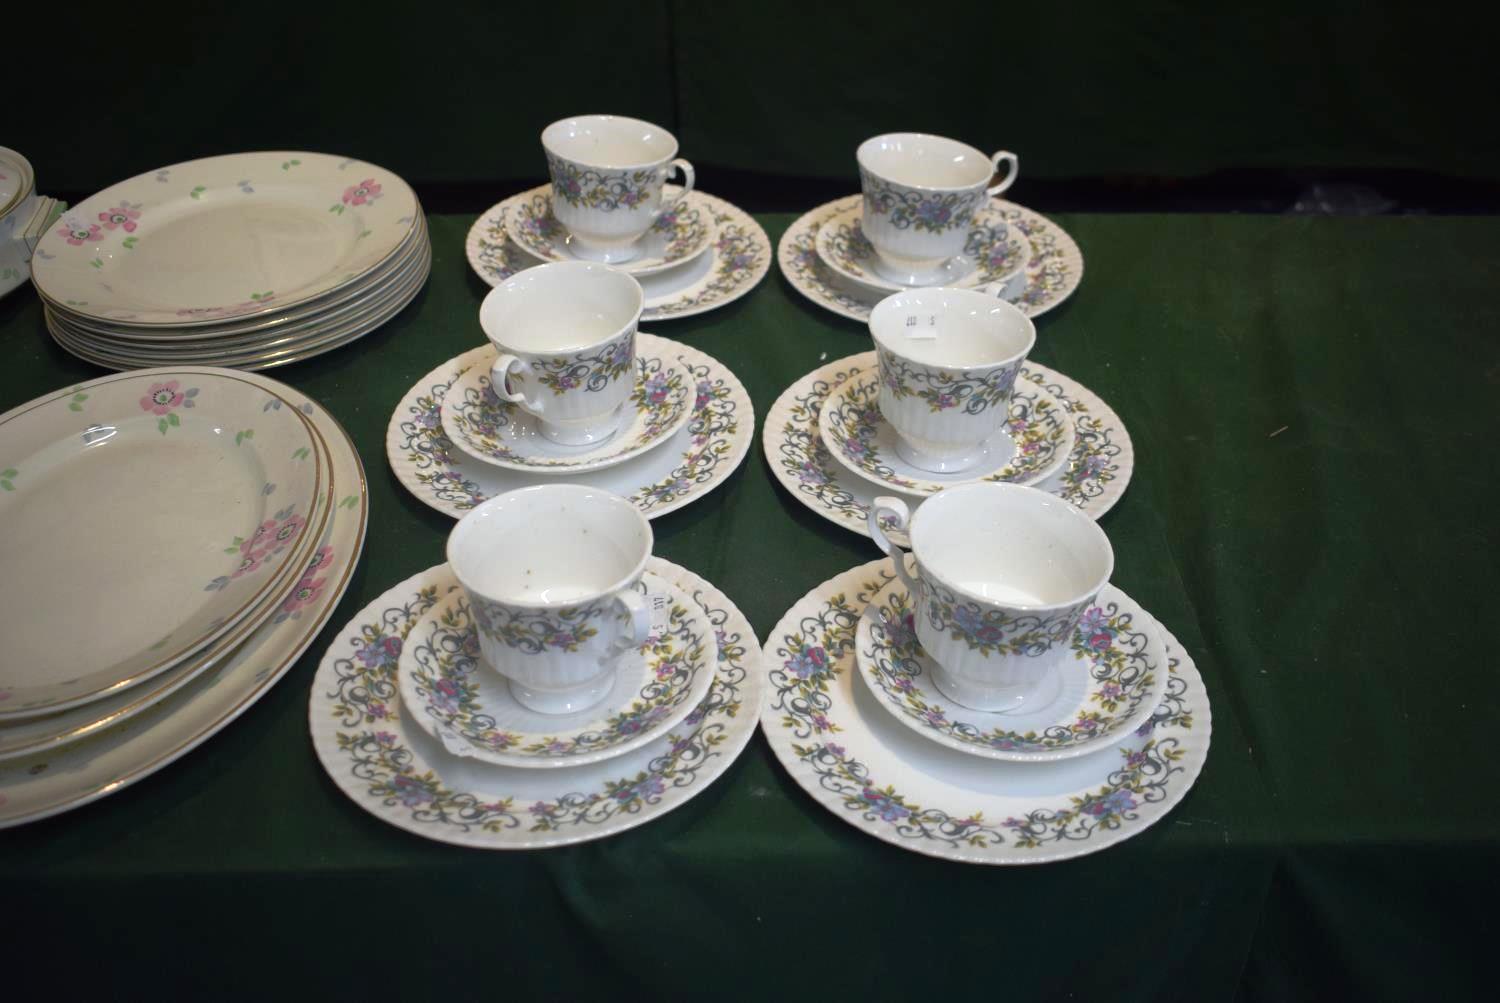 A Royal Windsor Trellis Rose Part Tea Set Comprising Six Cups, Six Saucers and Six Side Plates